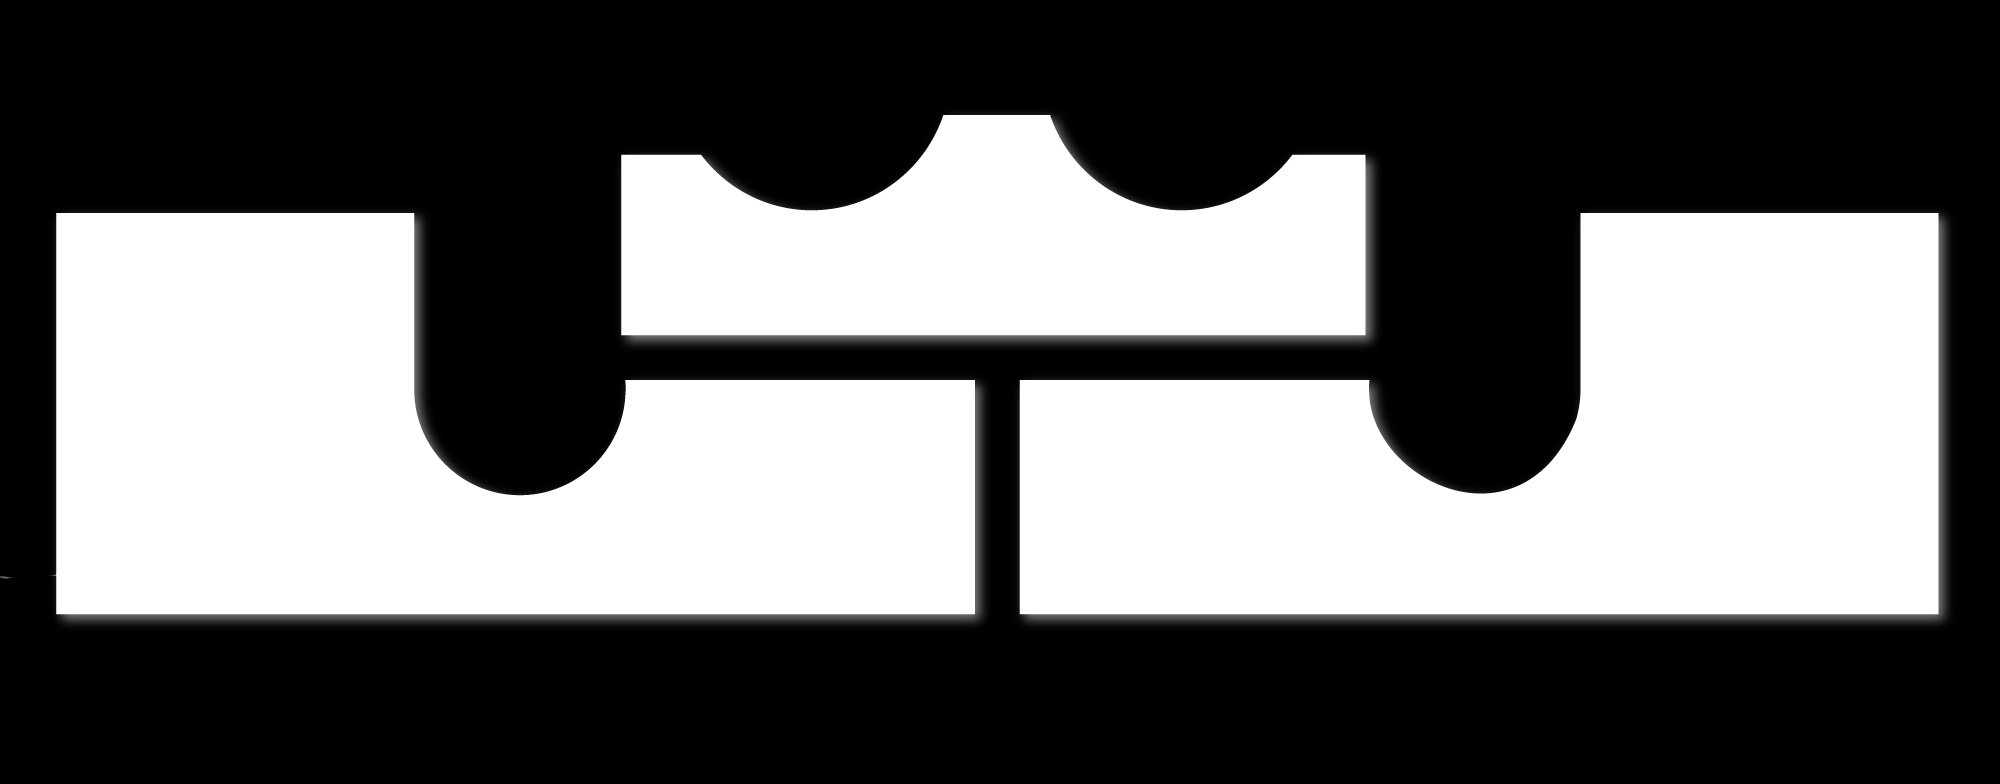 lebron logo